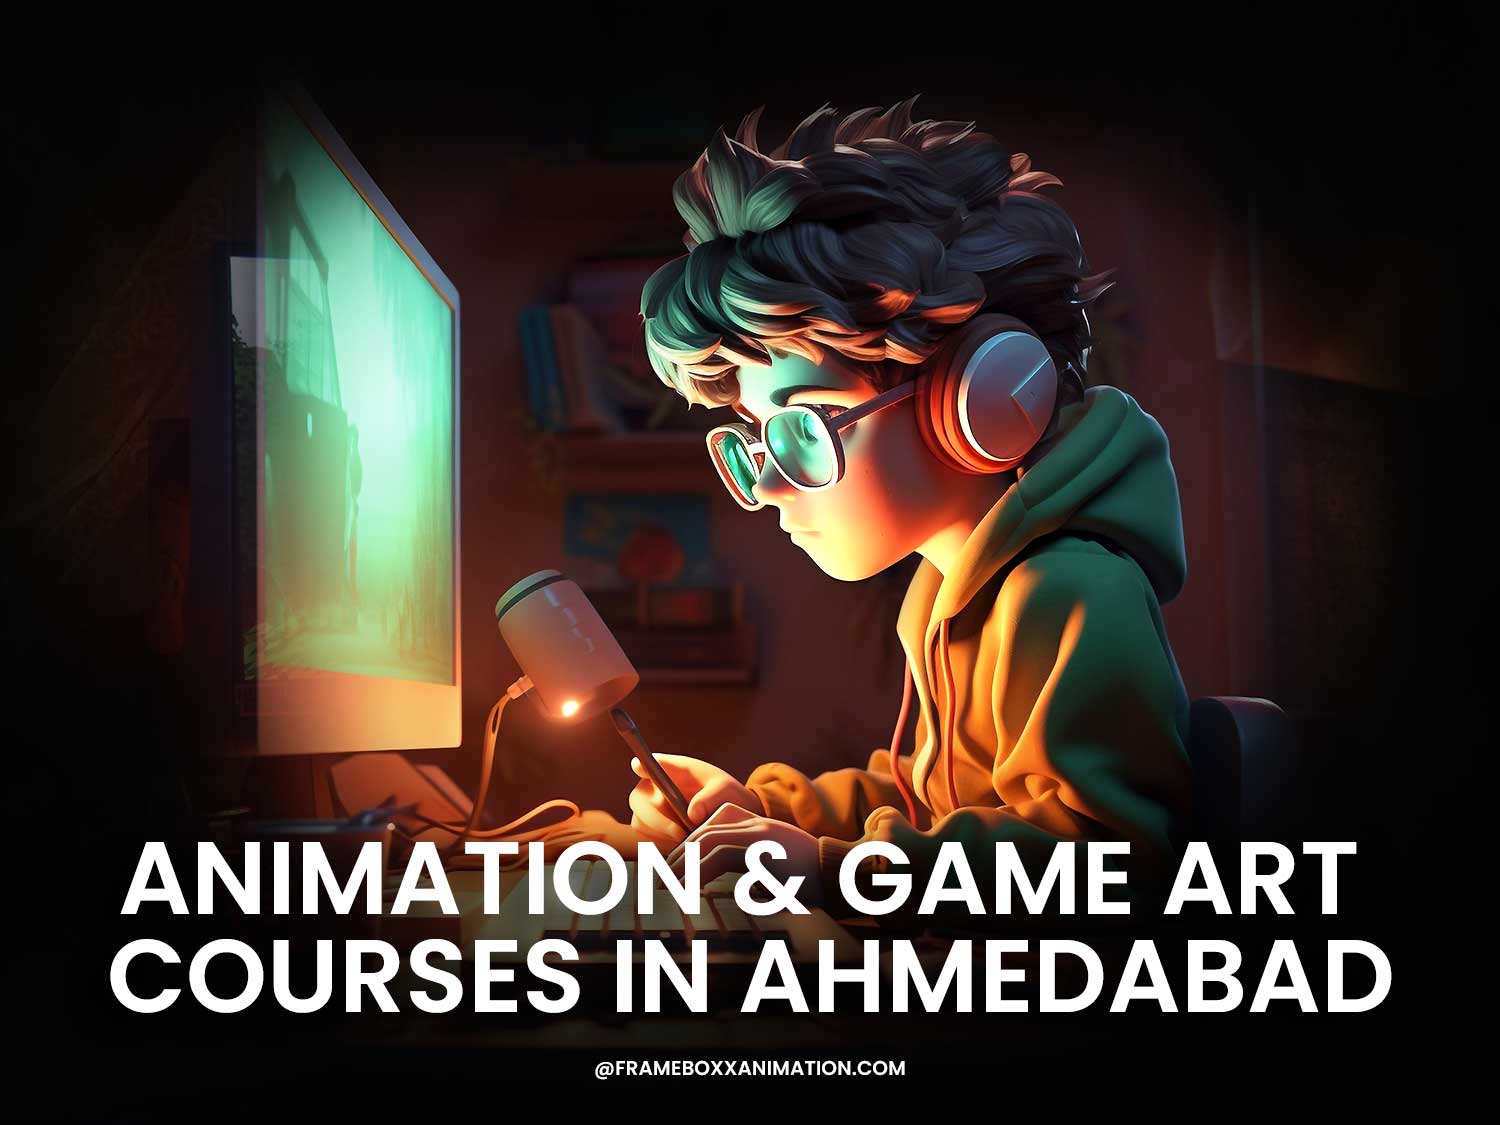 Animation & Game Art